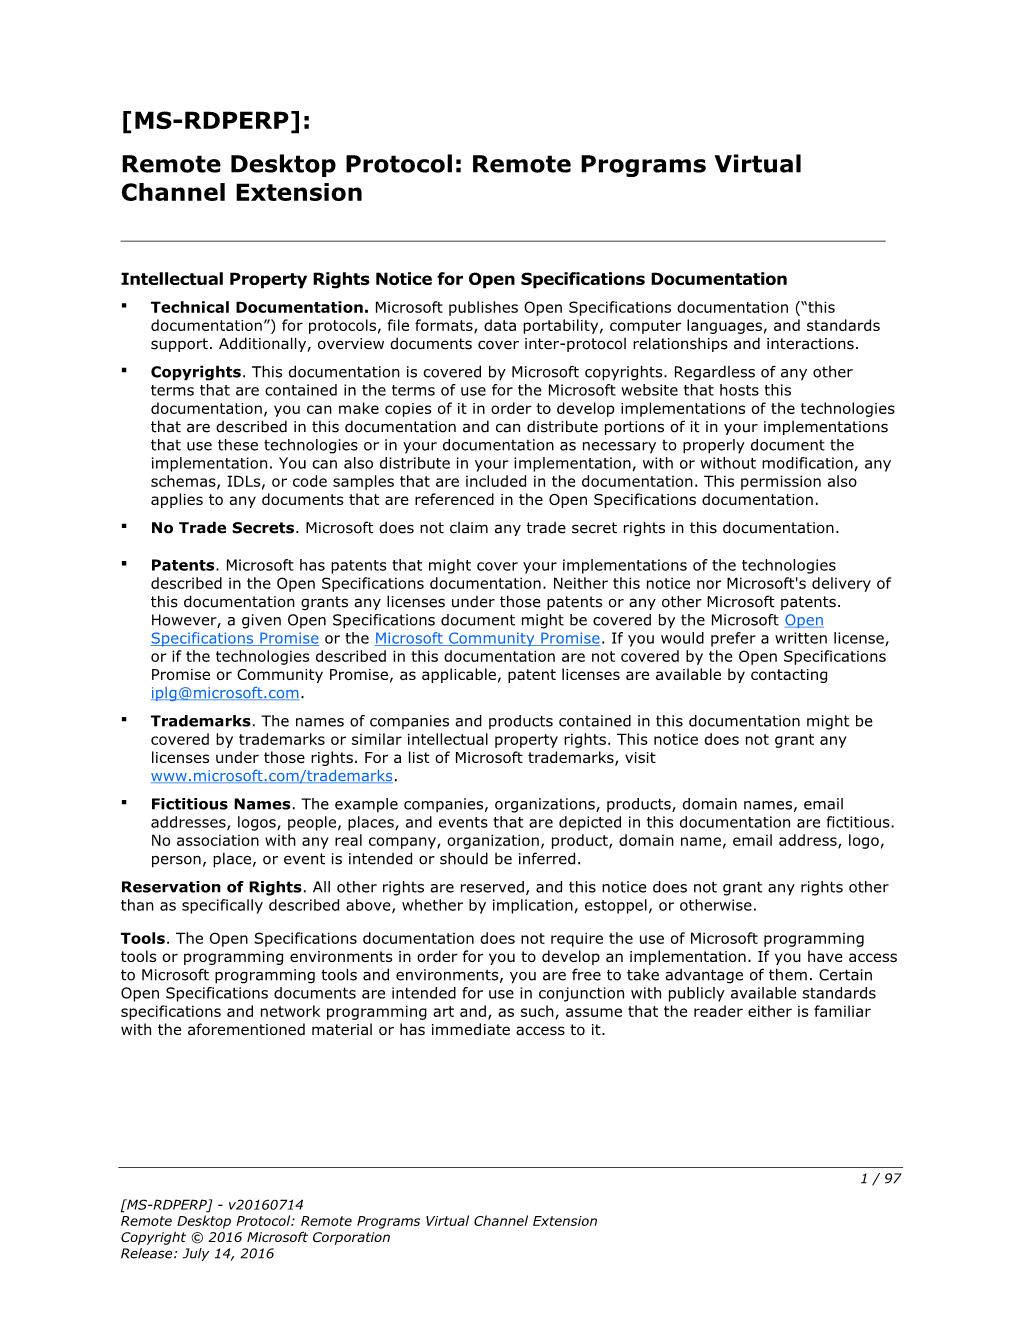 Remote Desktop Protocol: Remote Programs Virtual Channel Extension